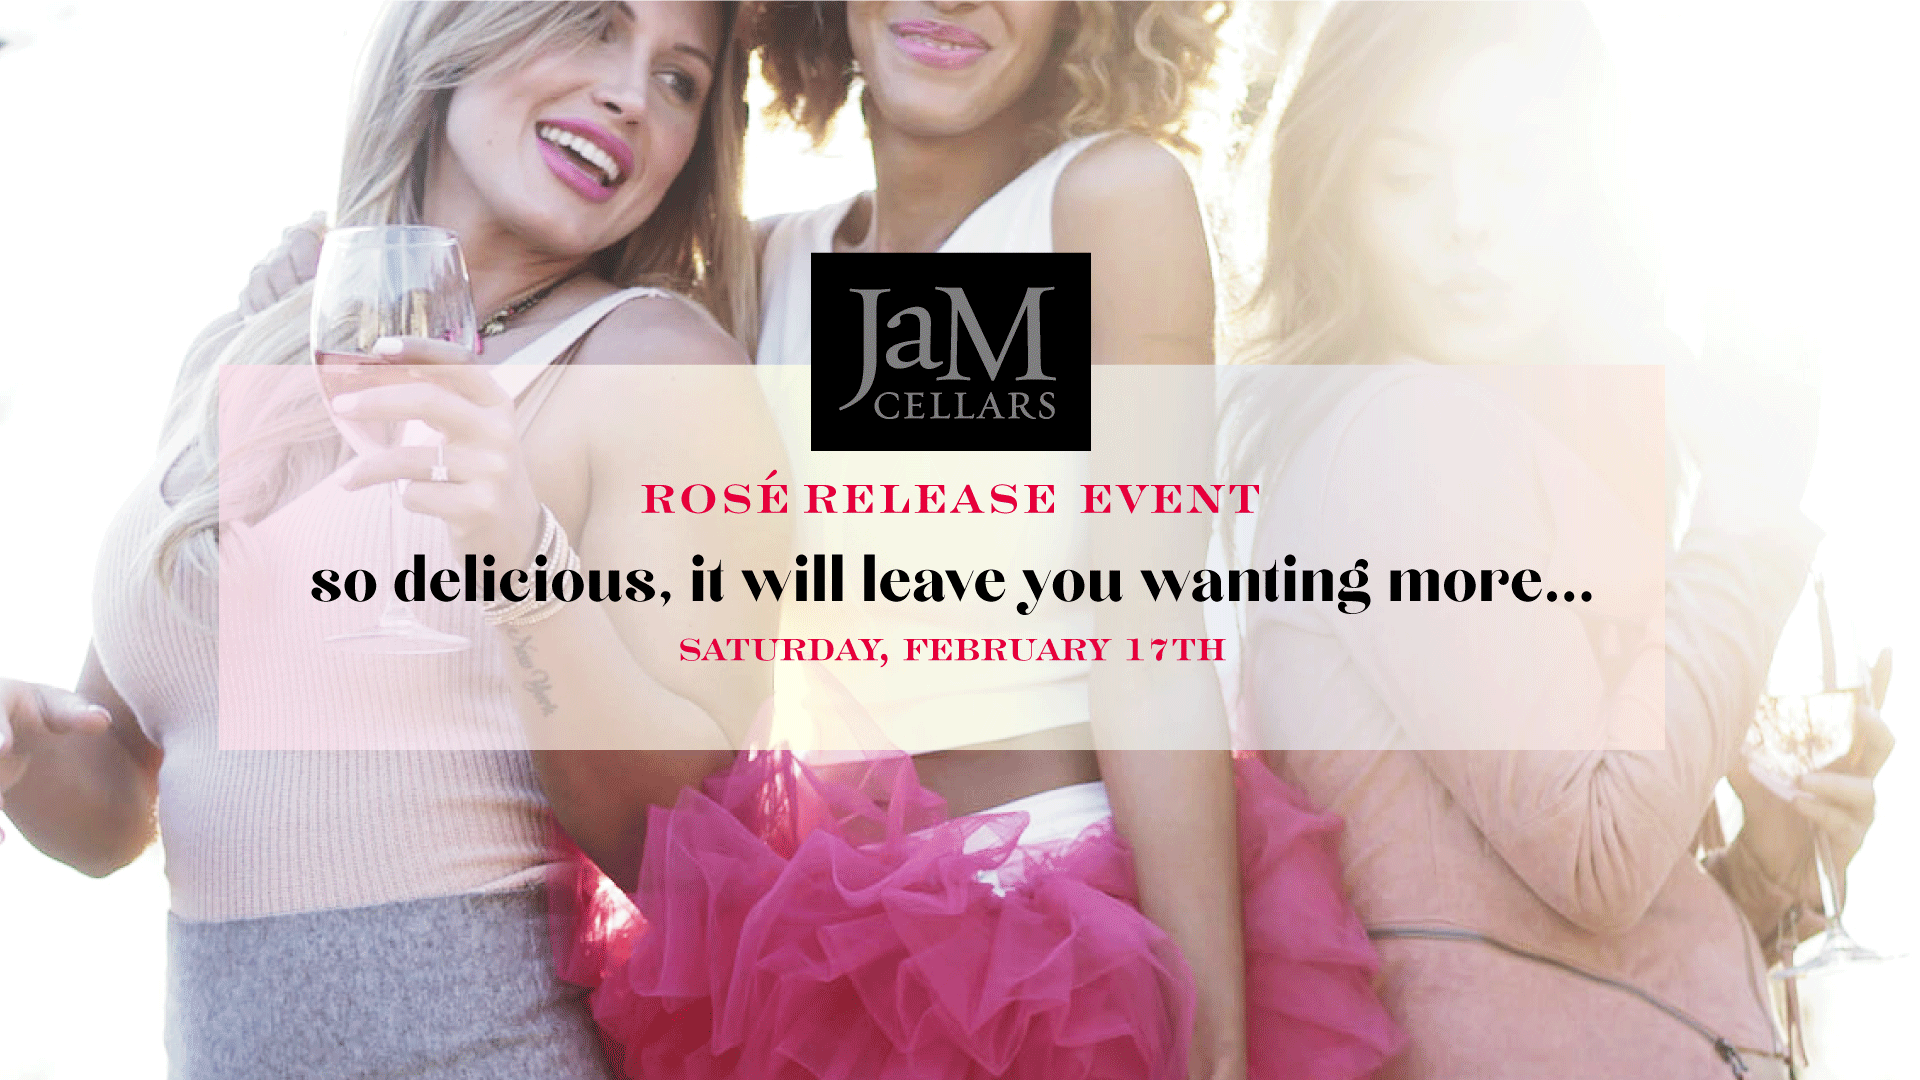 Three women enjoying JaM Cellars wine with text: Rose Release Event